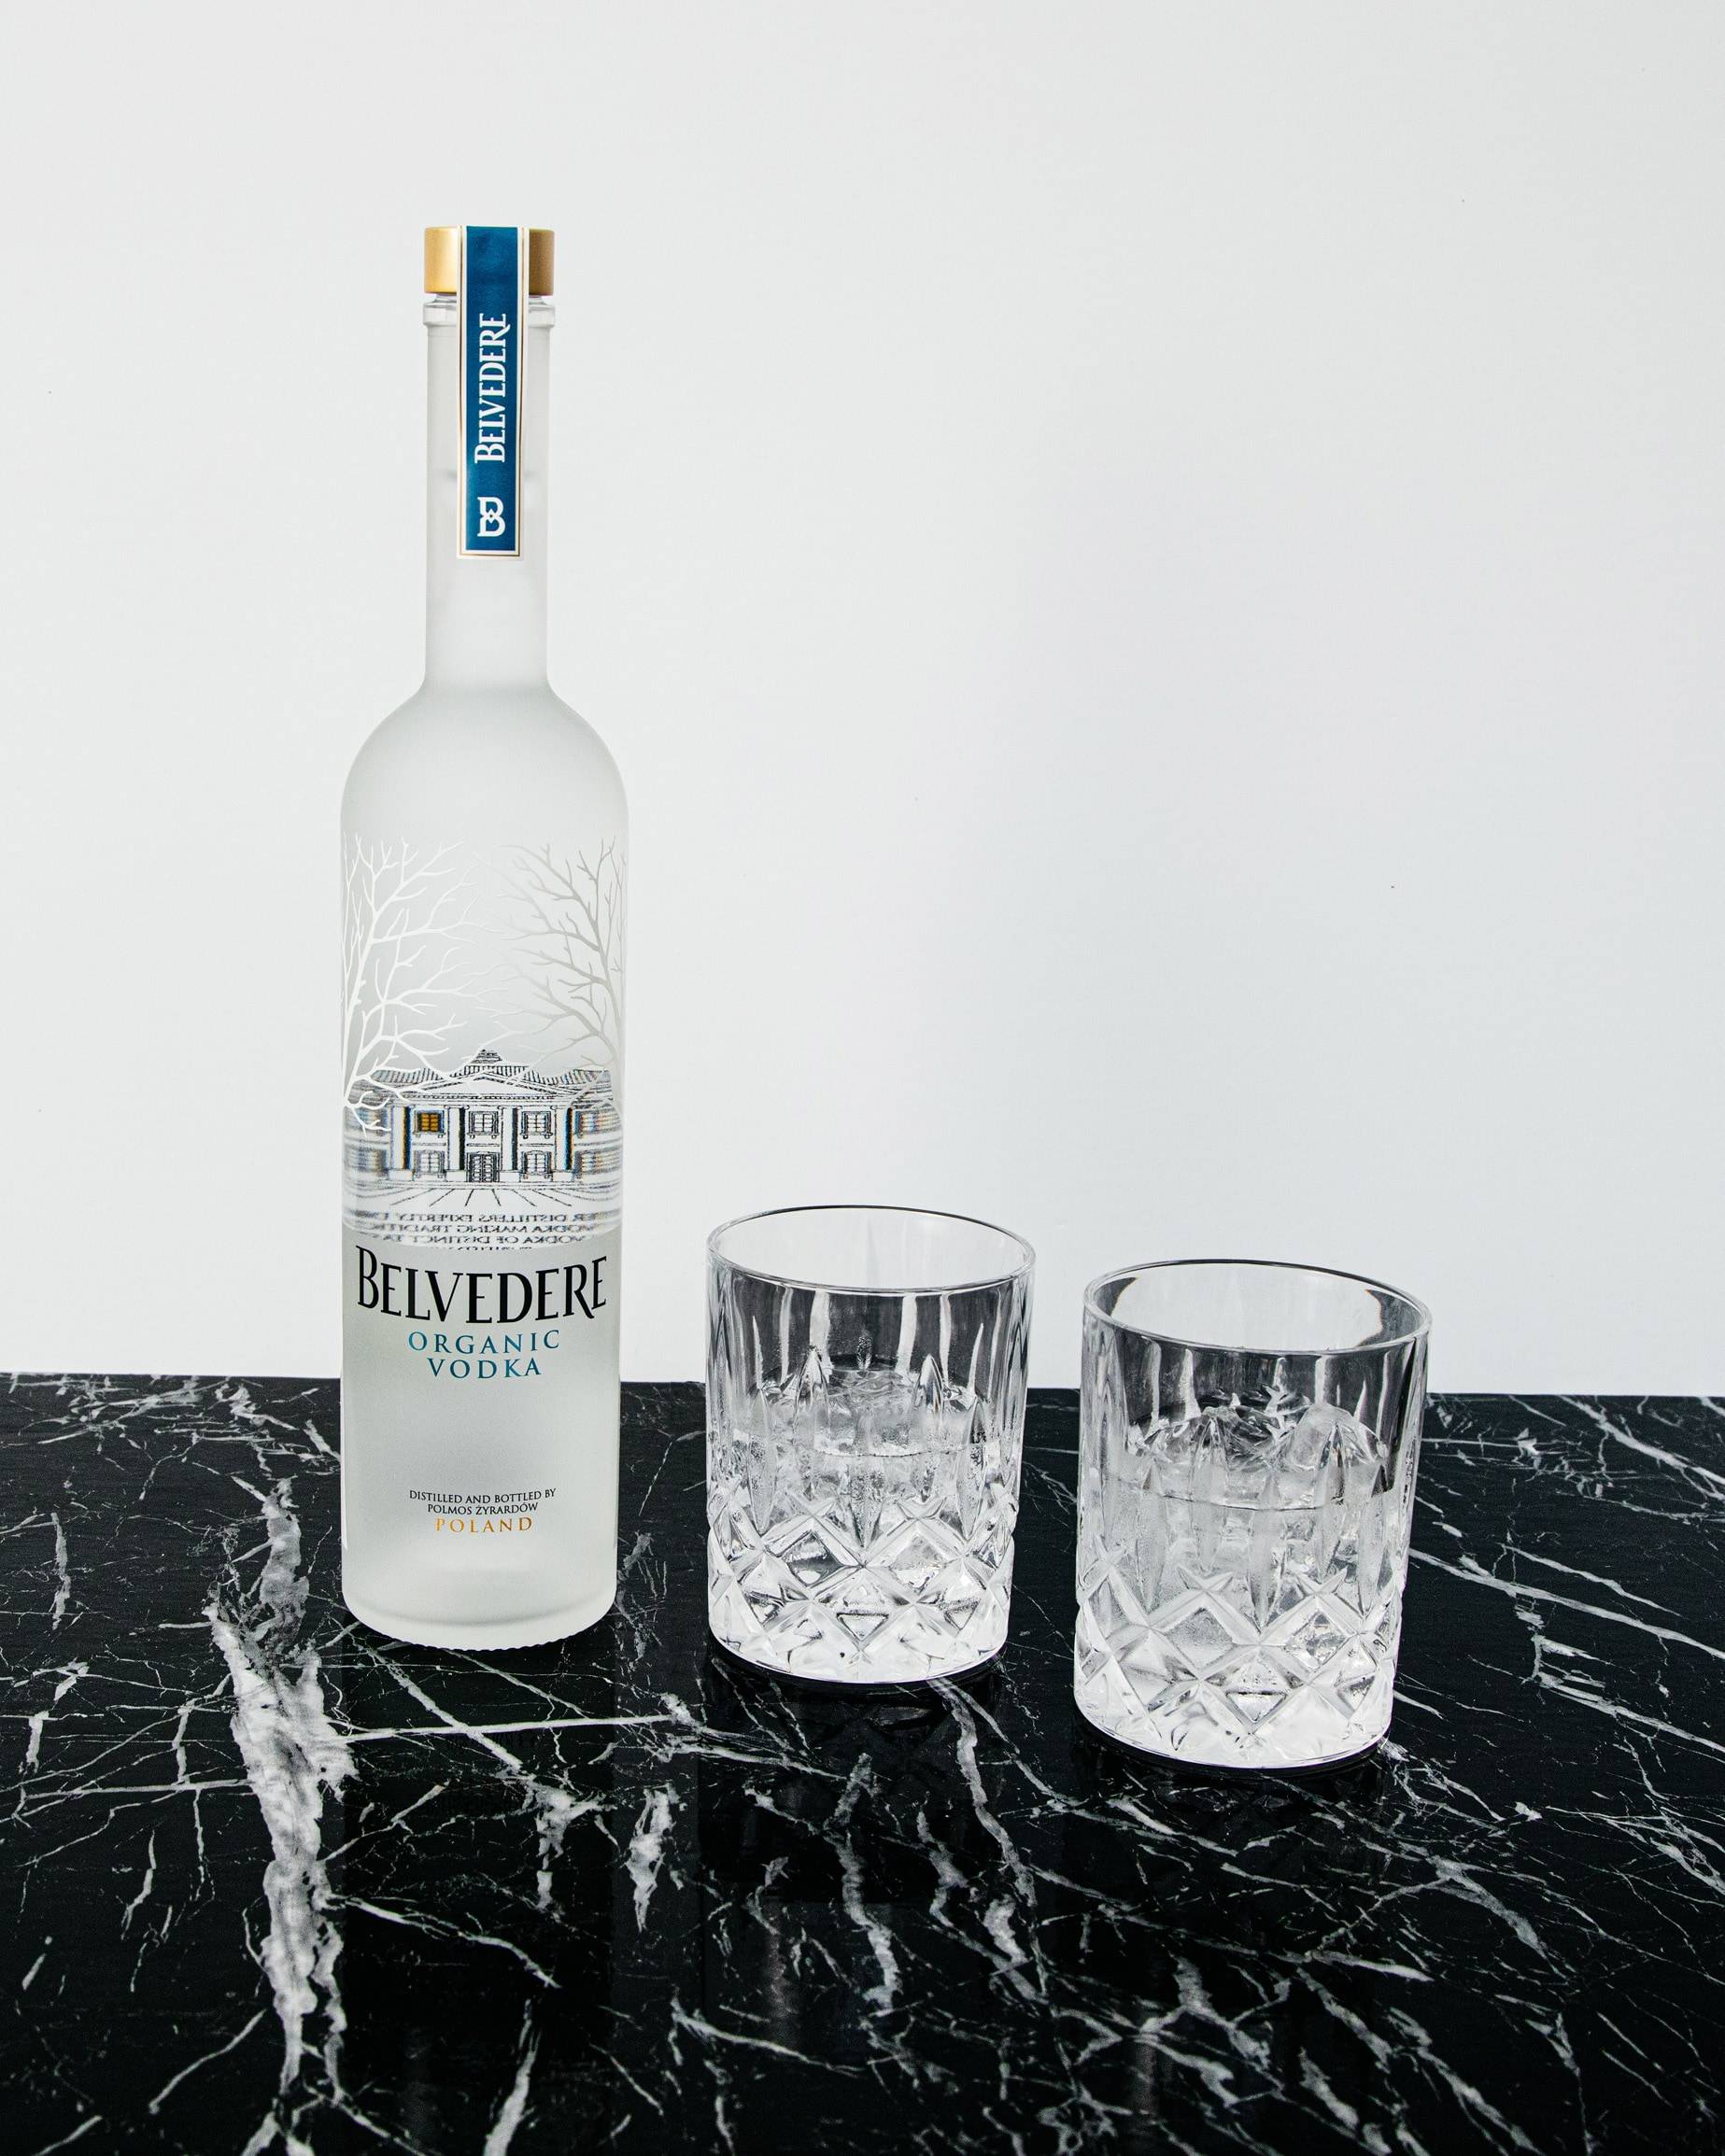 Belvedere organic vodka bottle